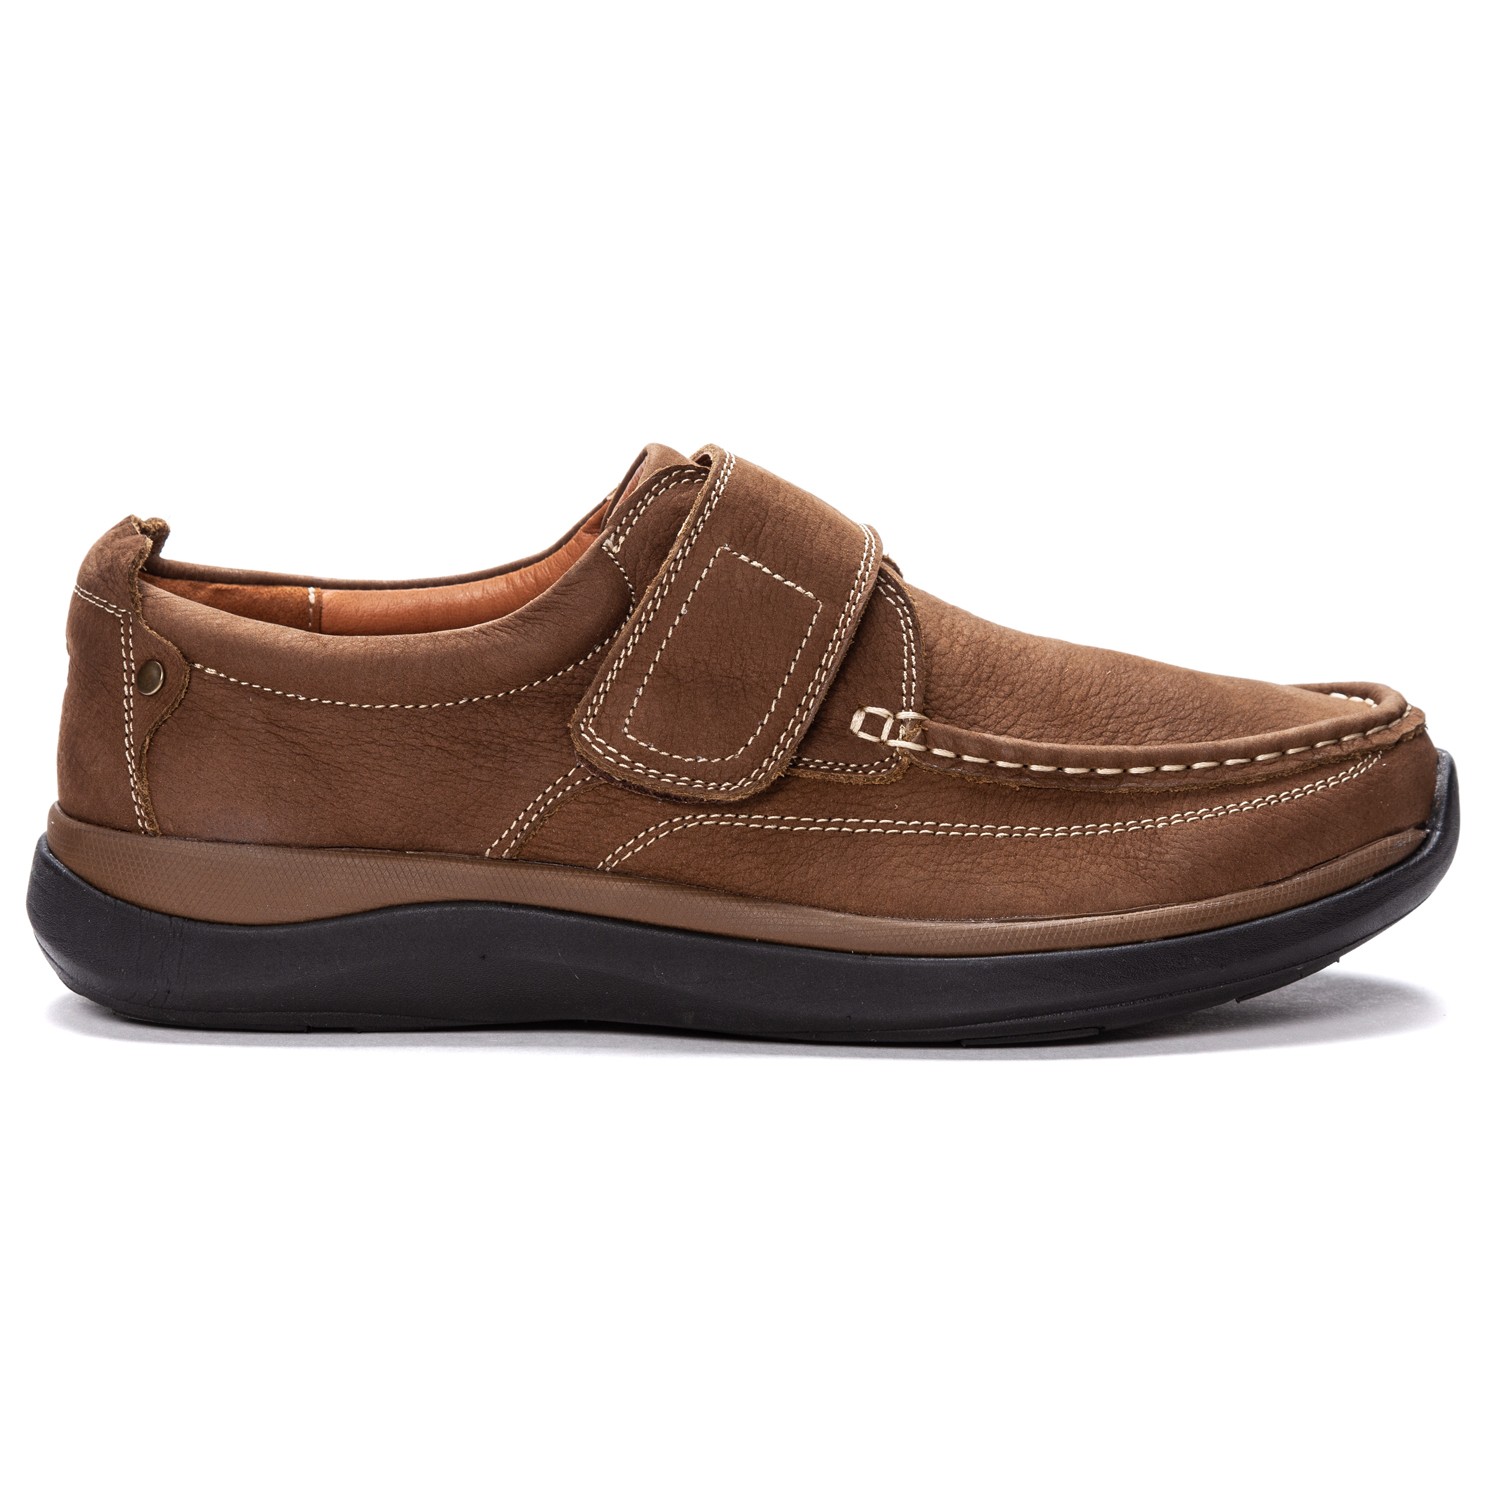 Propet Men's Porter Loafer Casual Shoes - image 2 of 6